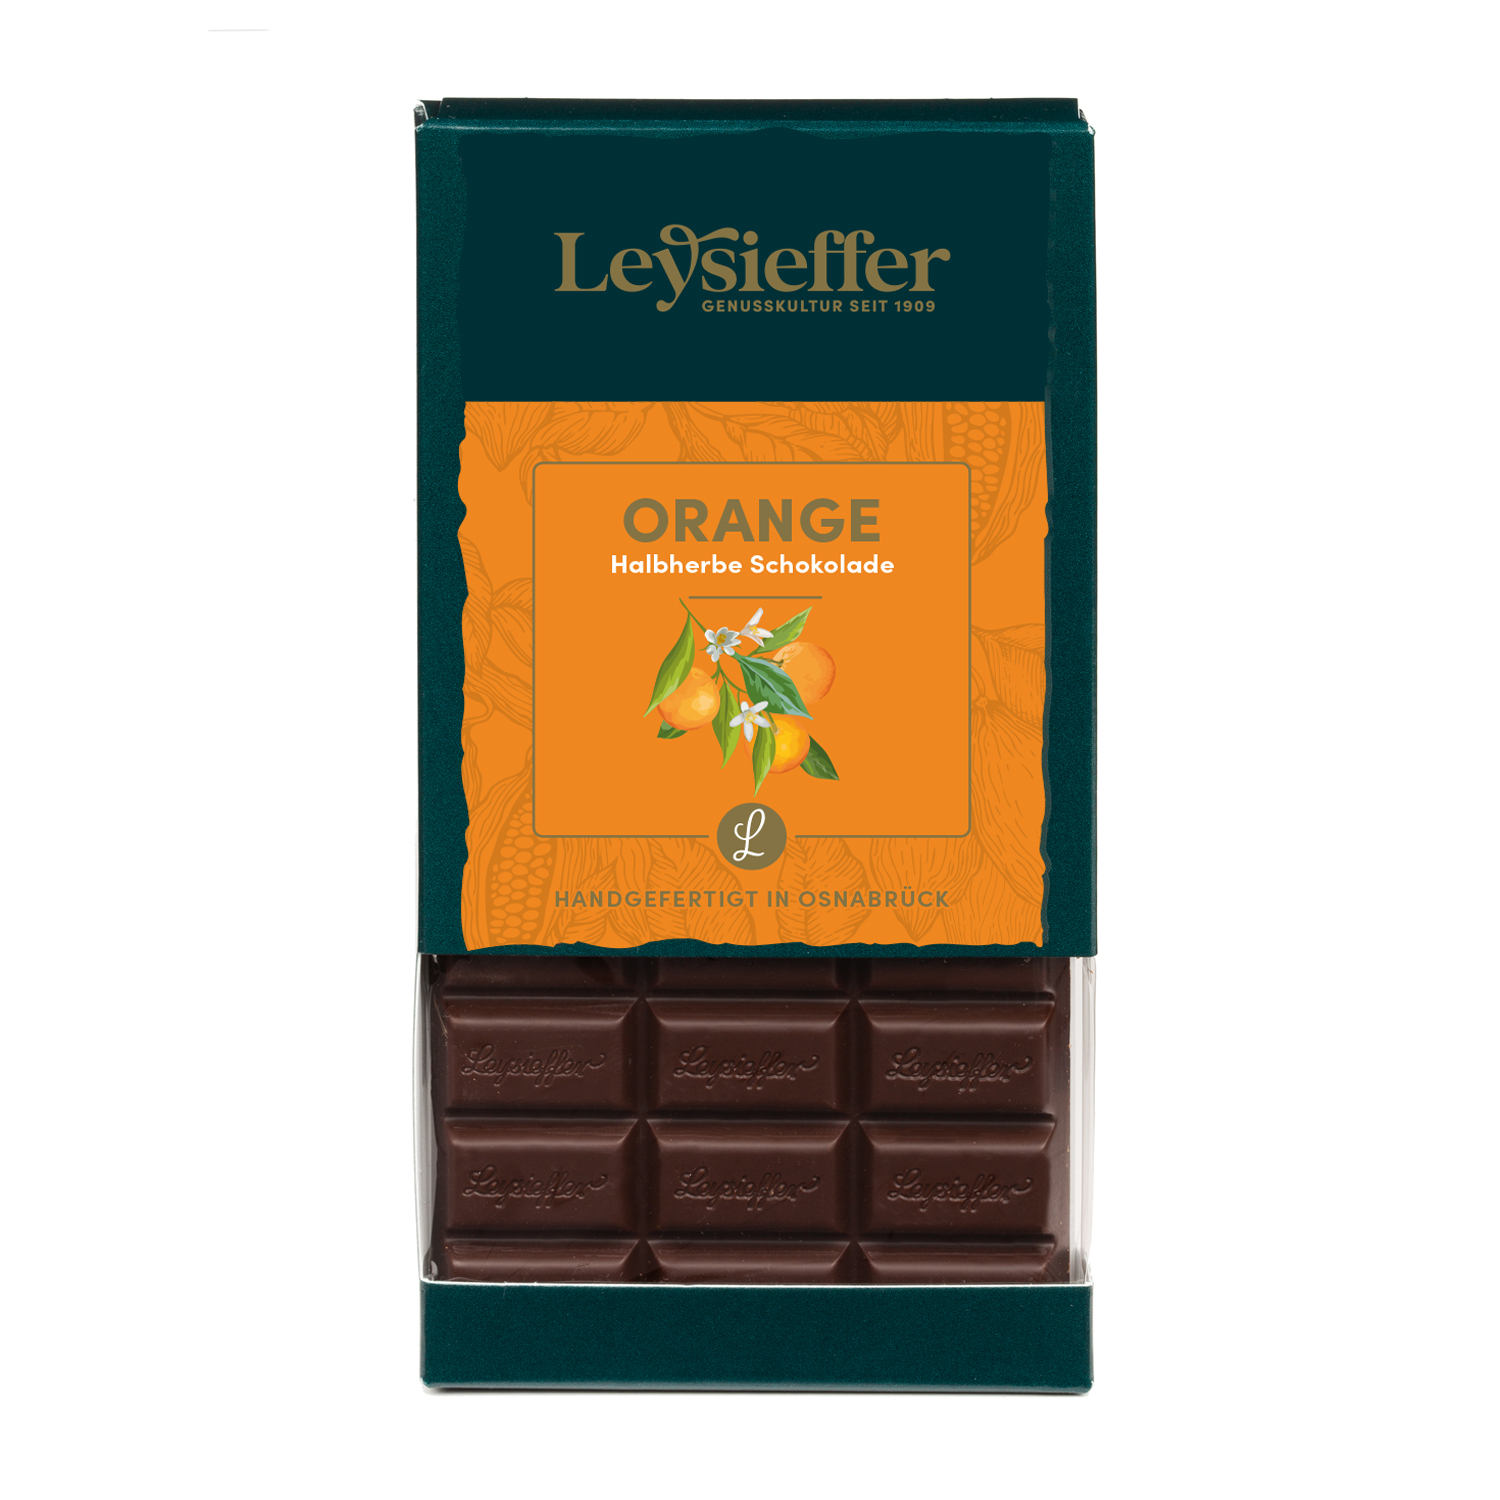 Semi-Sweet Chocolate with Orange